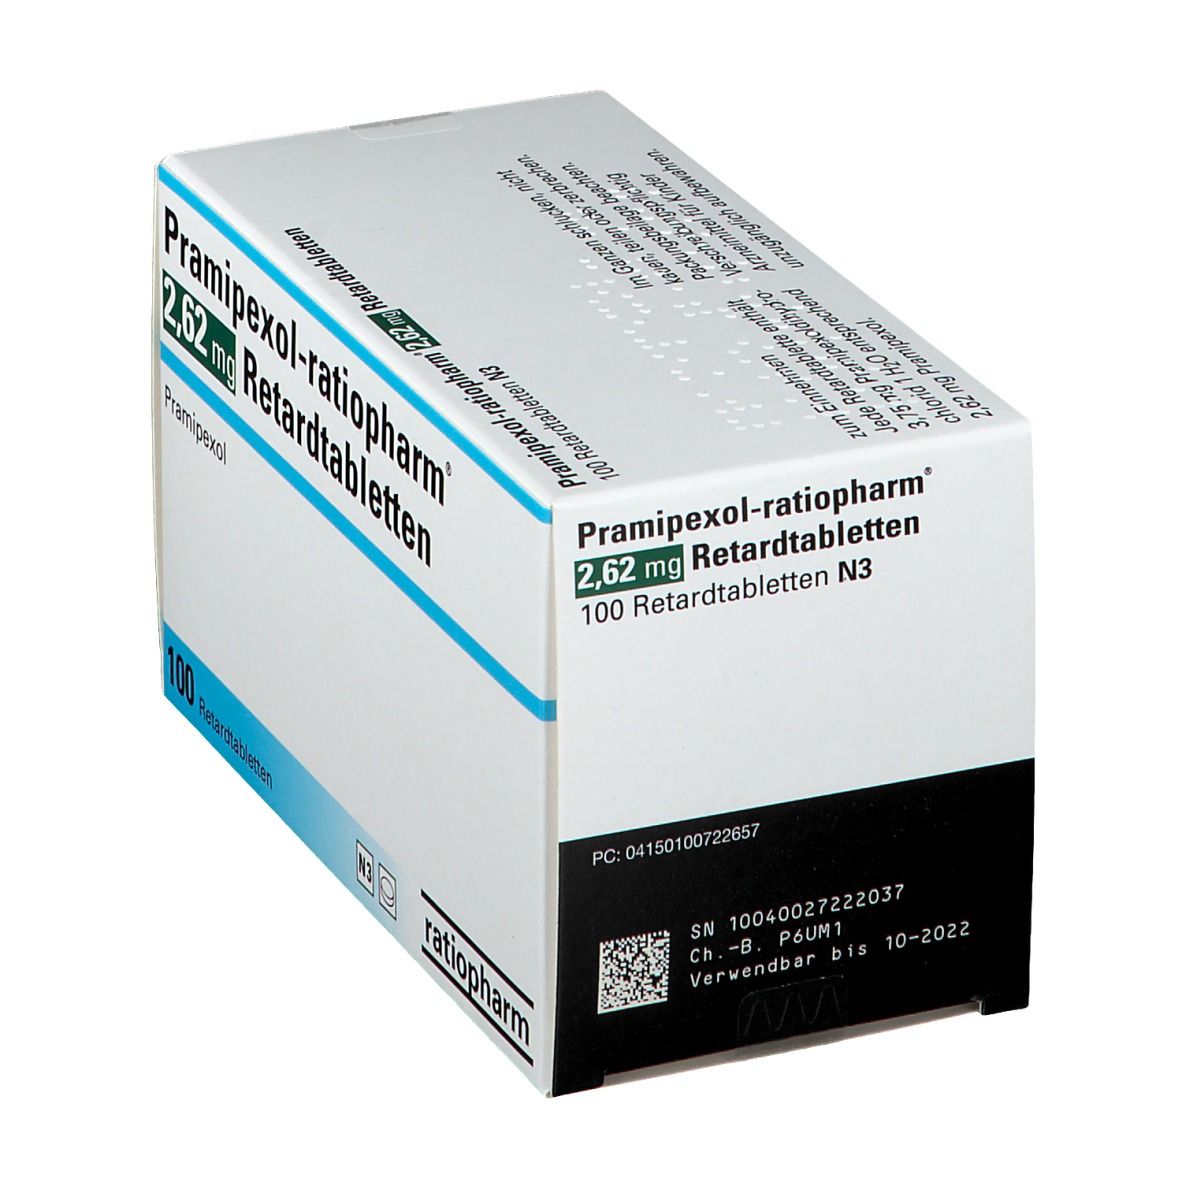 Pramipexol-ratiopharm® 2,62 mg